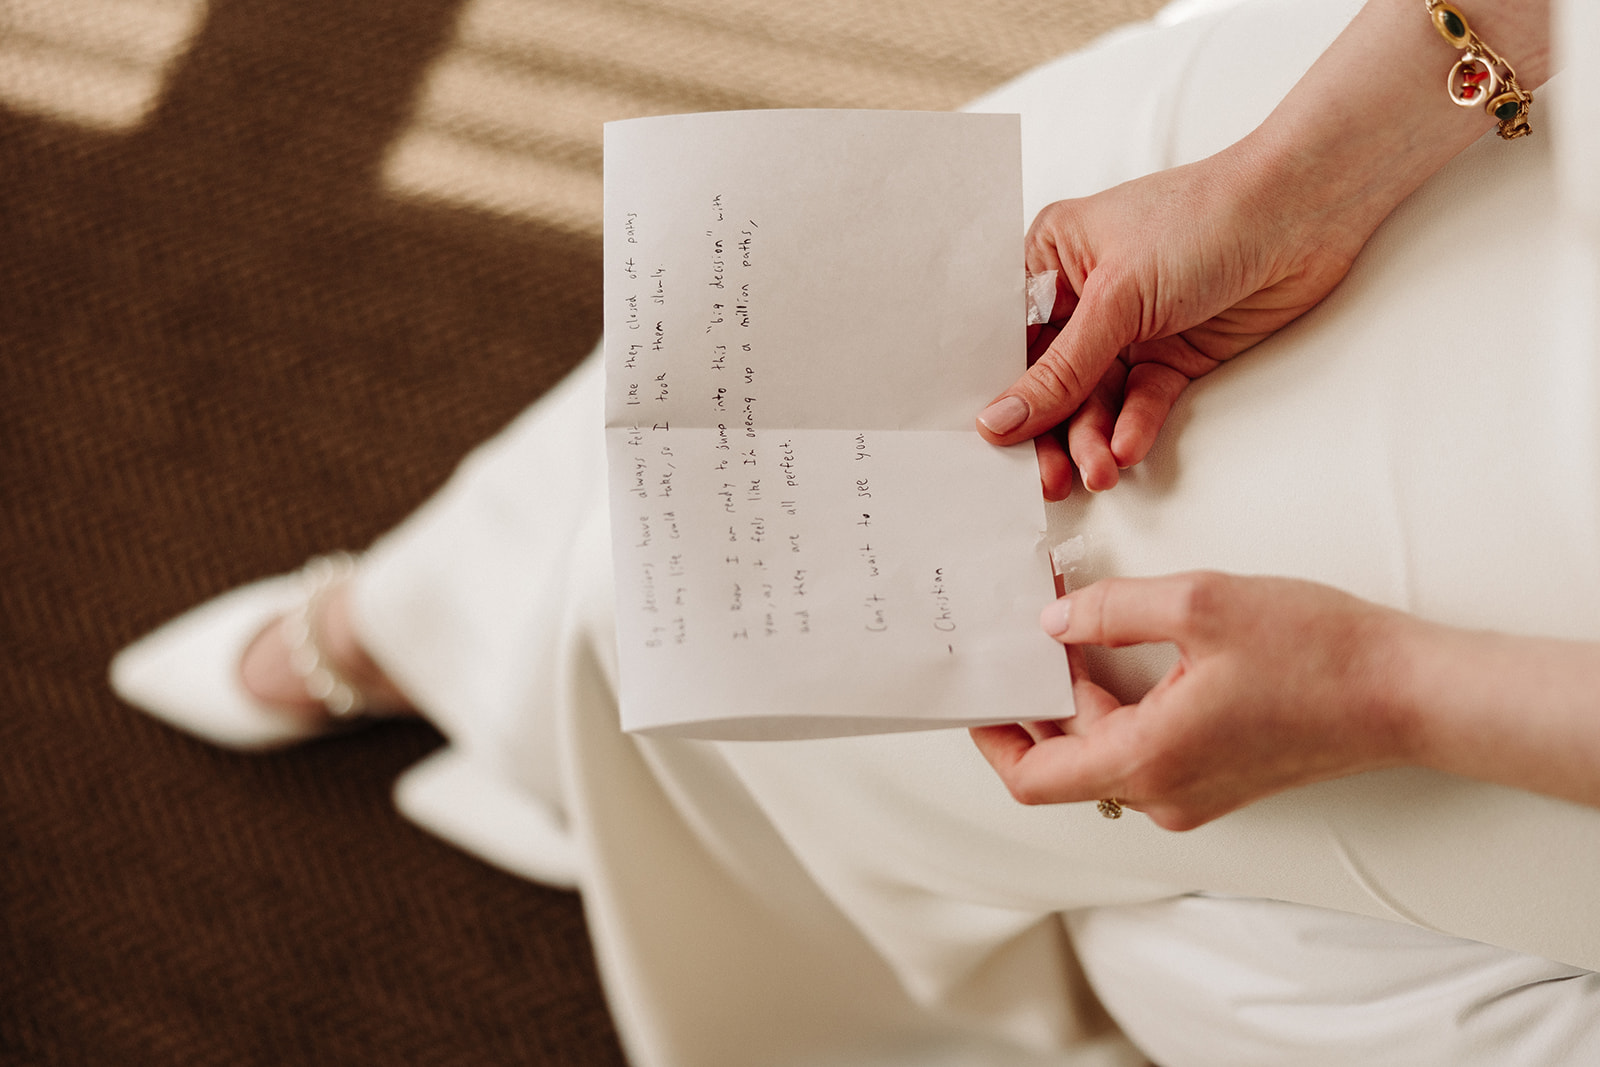 Bride reading a love letter in downtown Denver